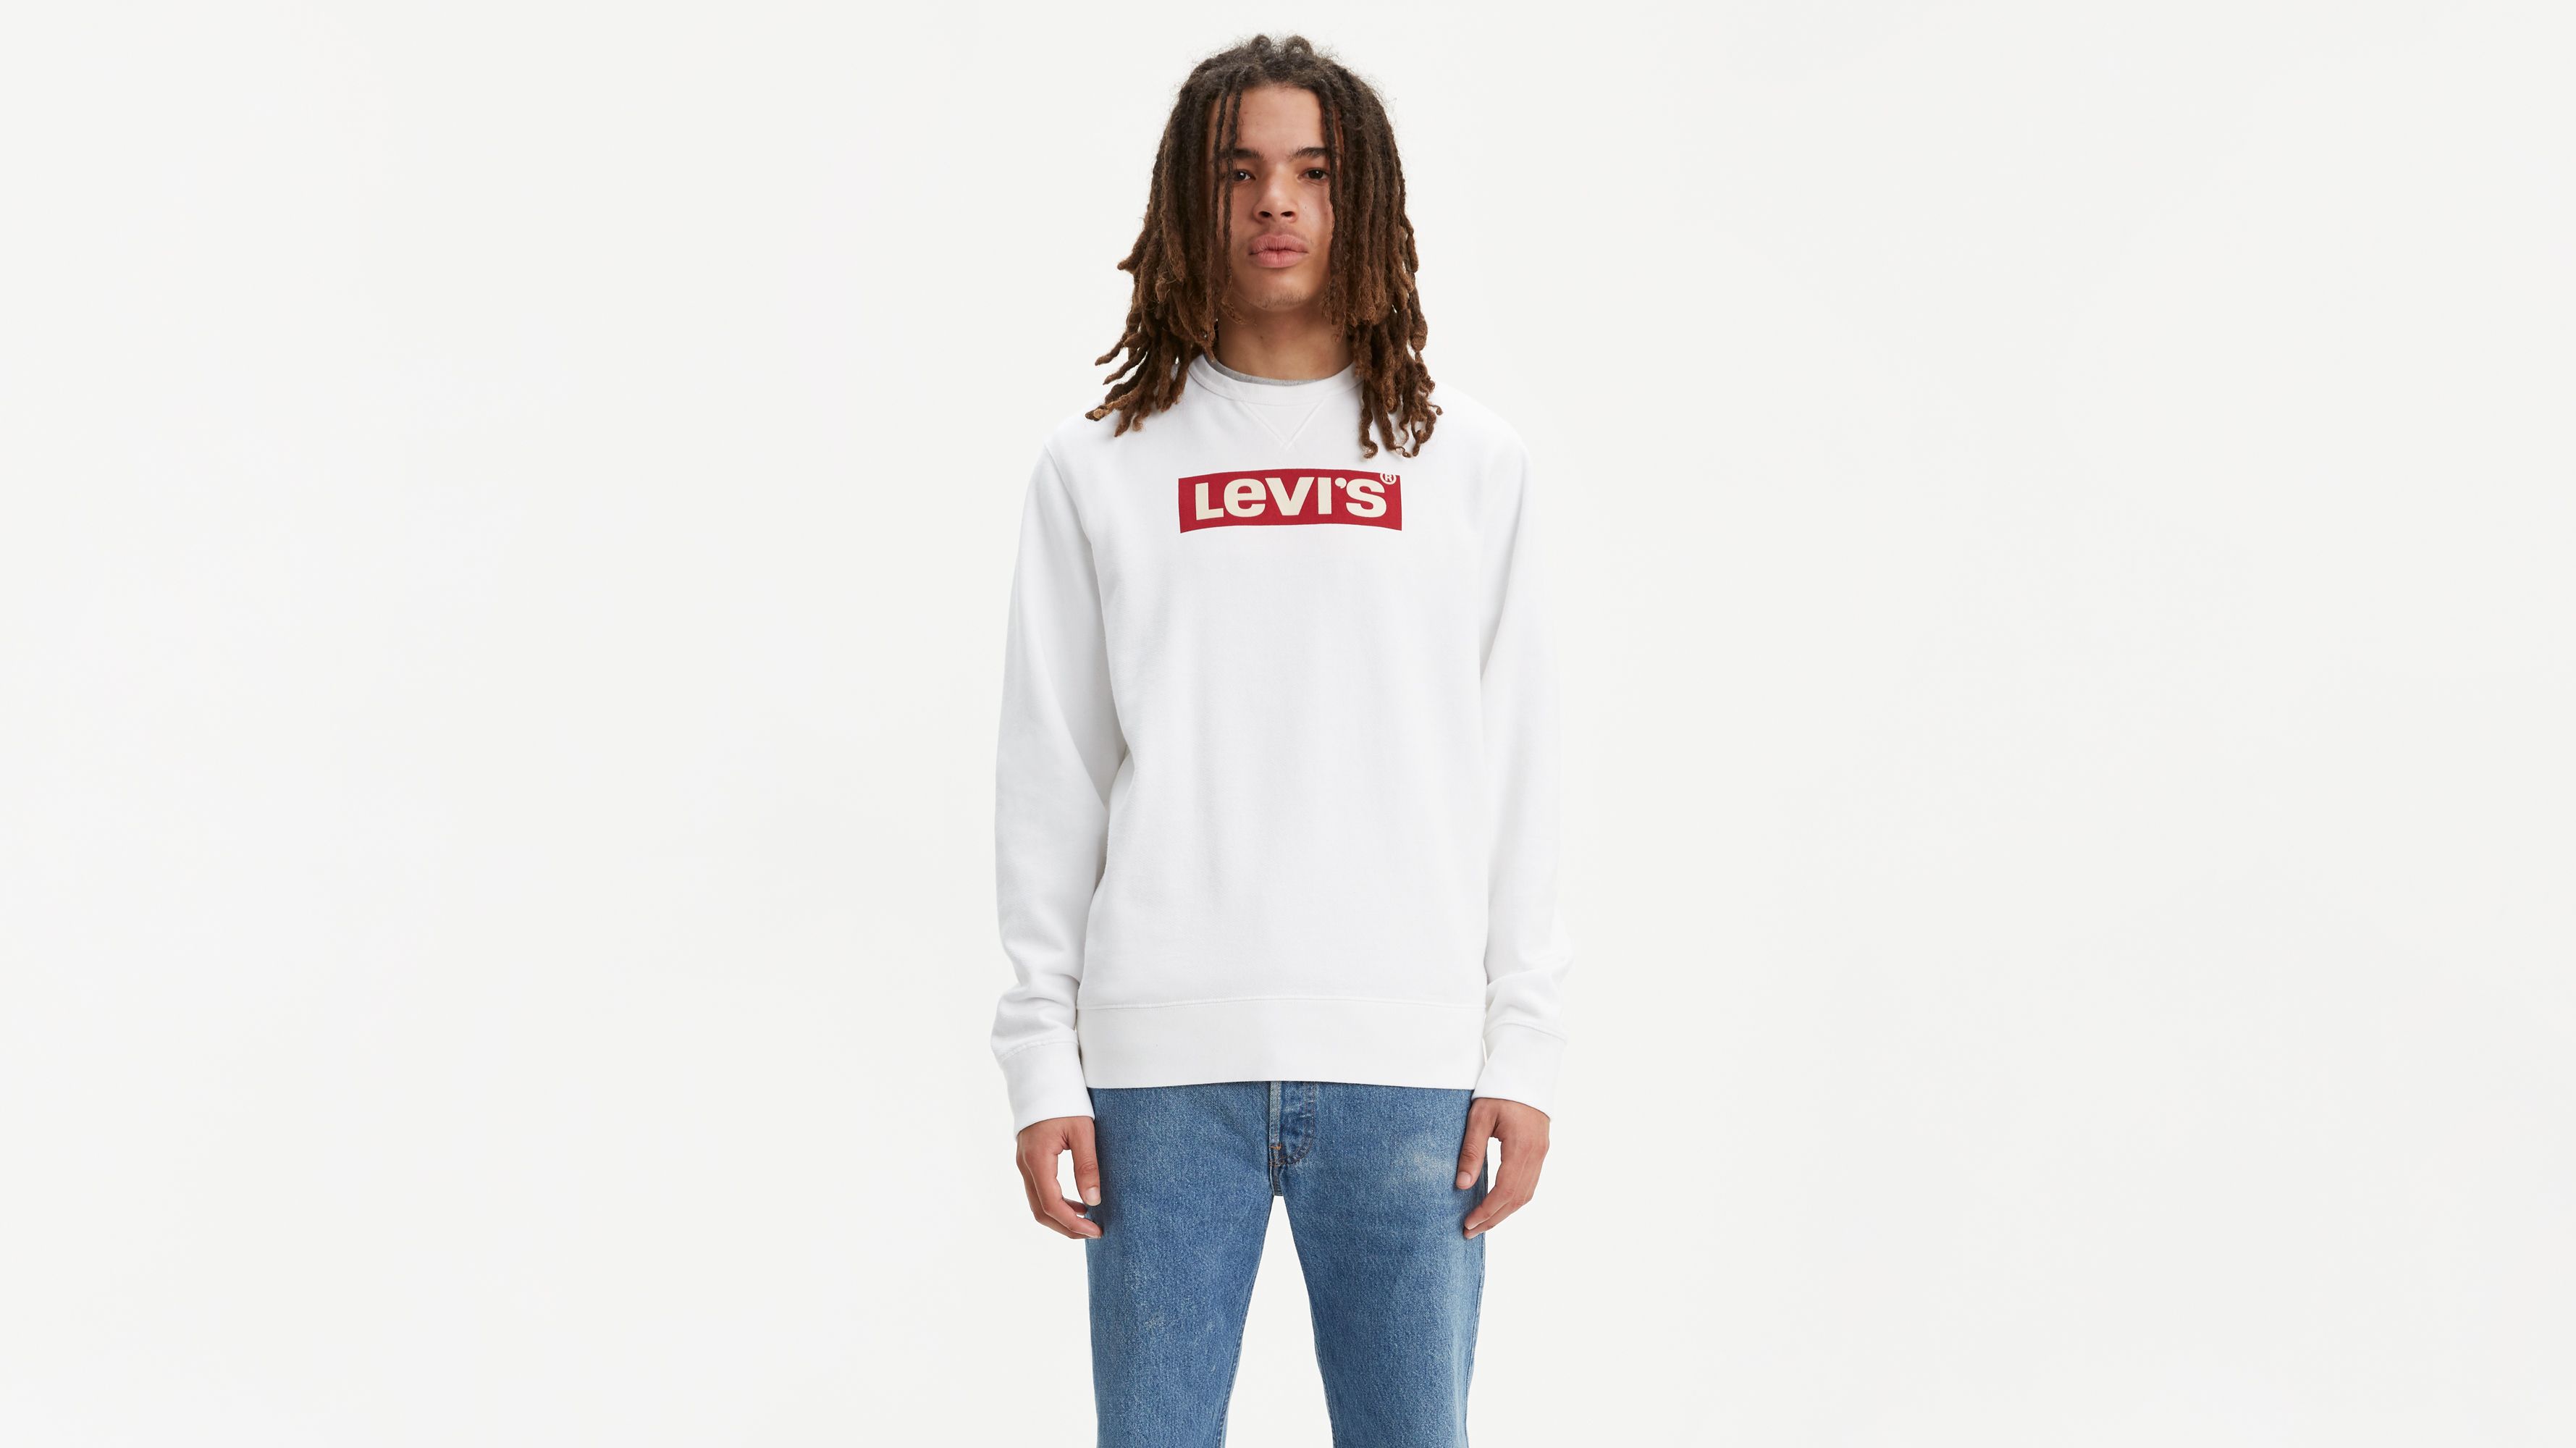 levis sweater white